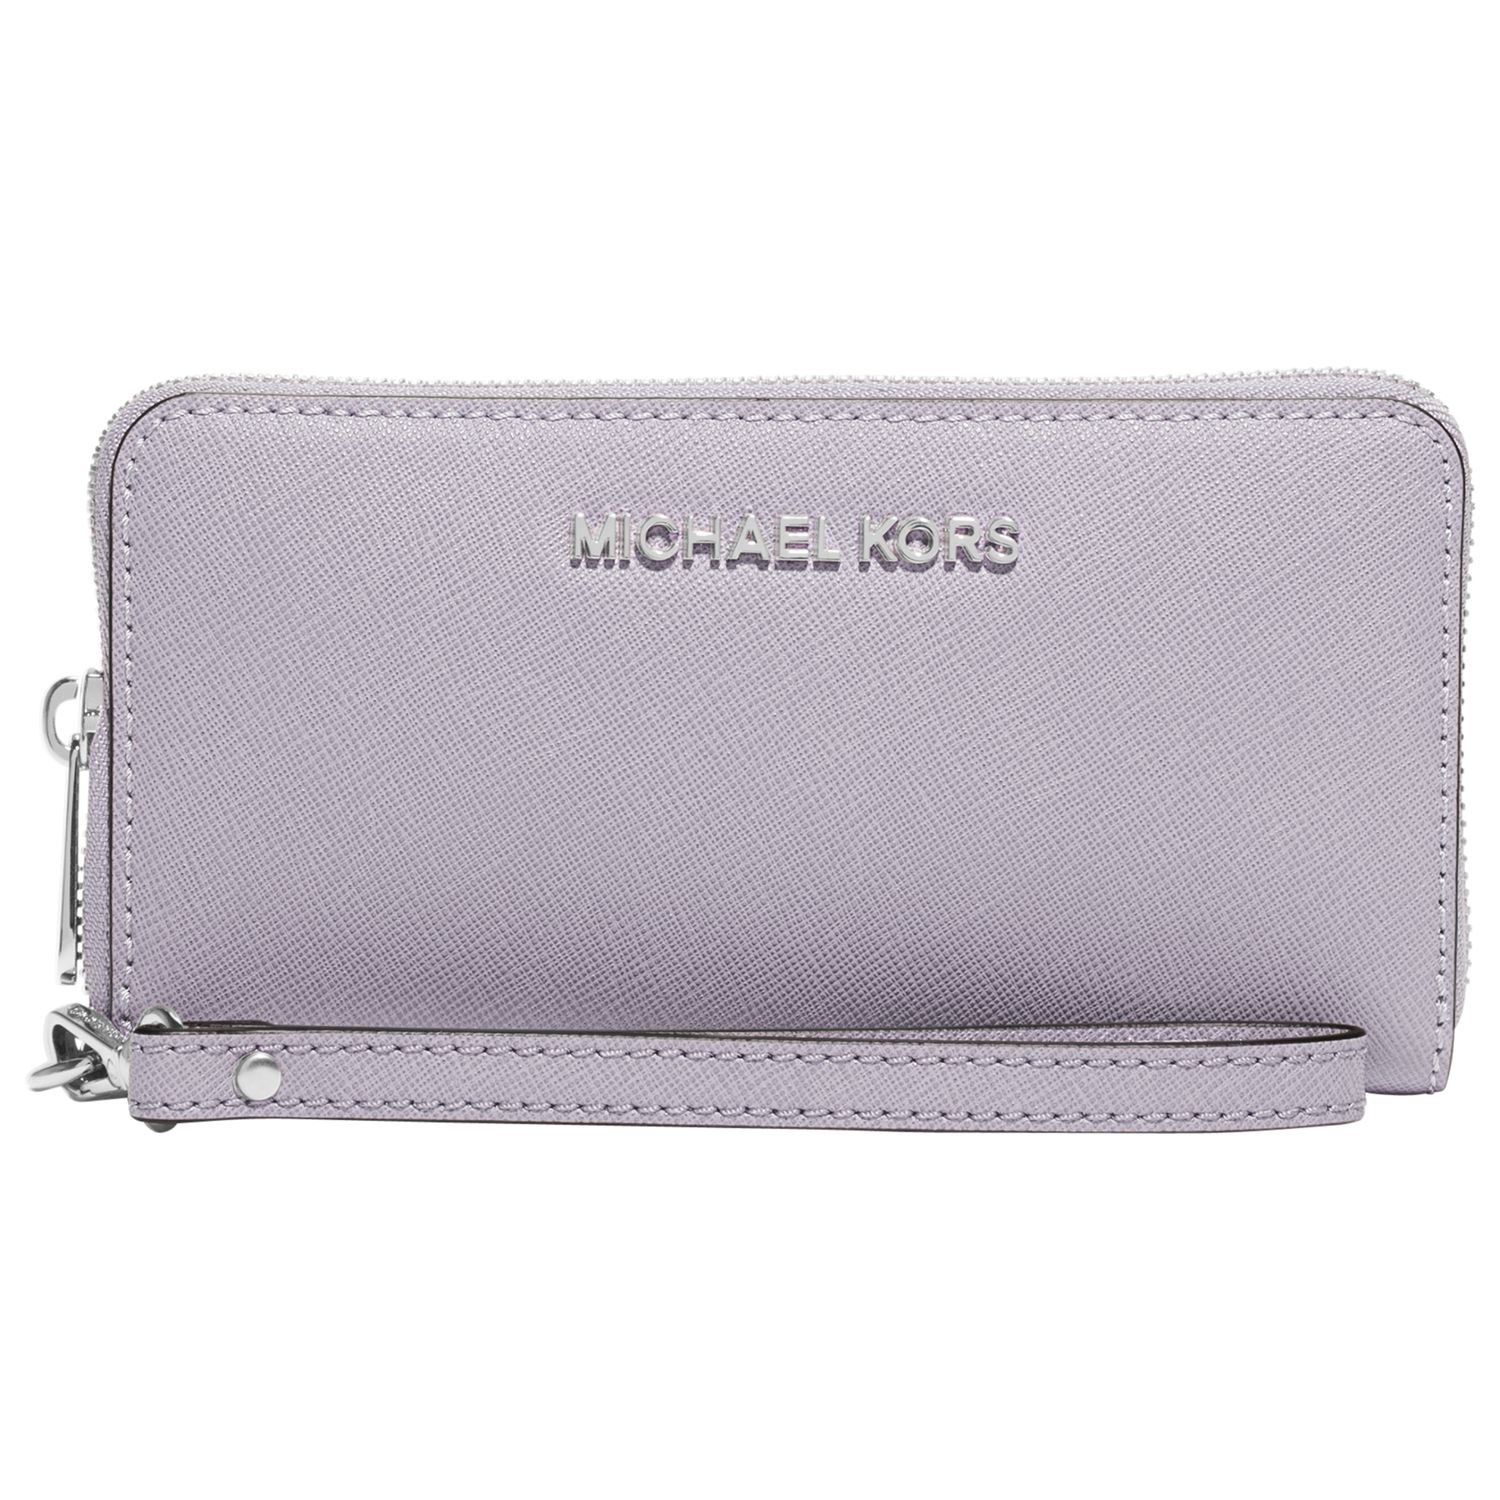 michael kors lilac purse